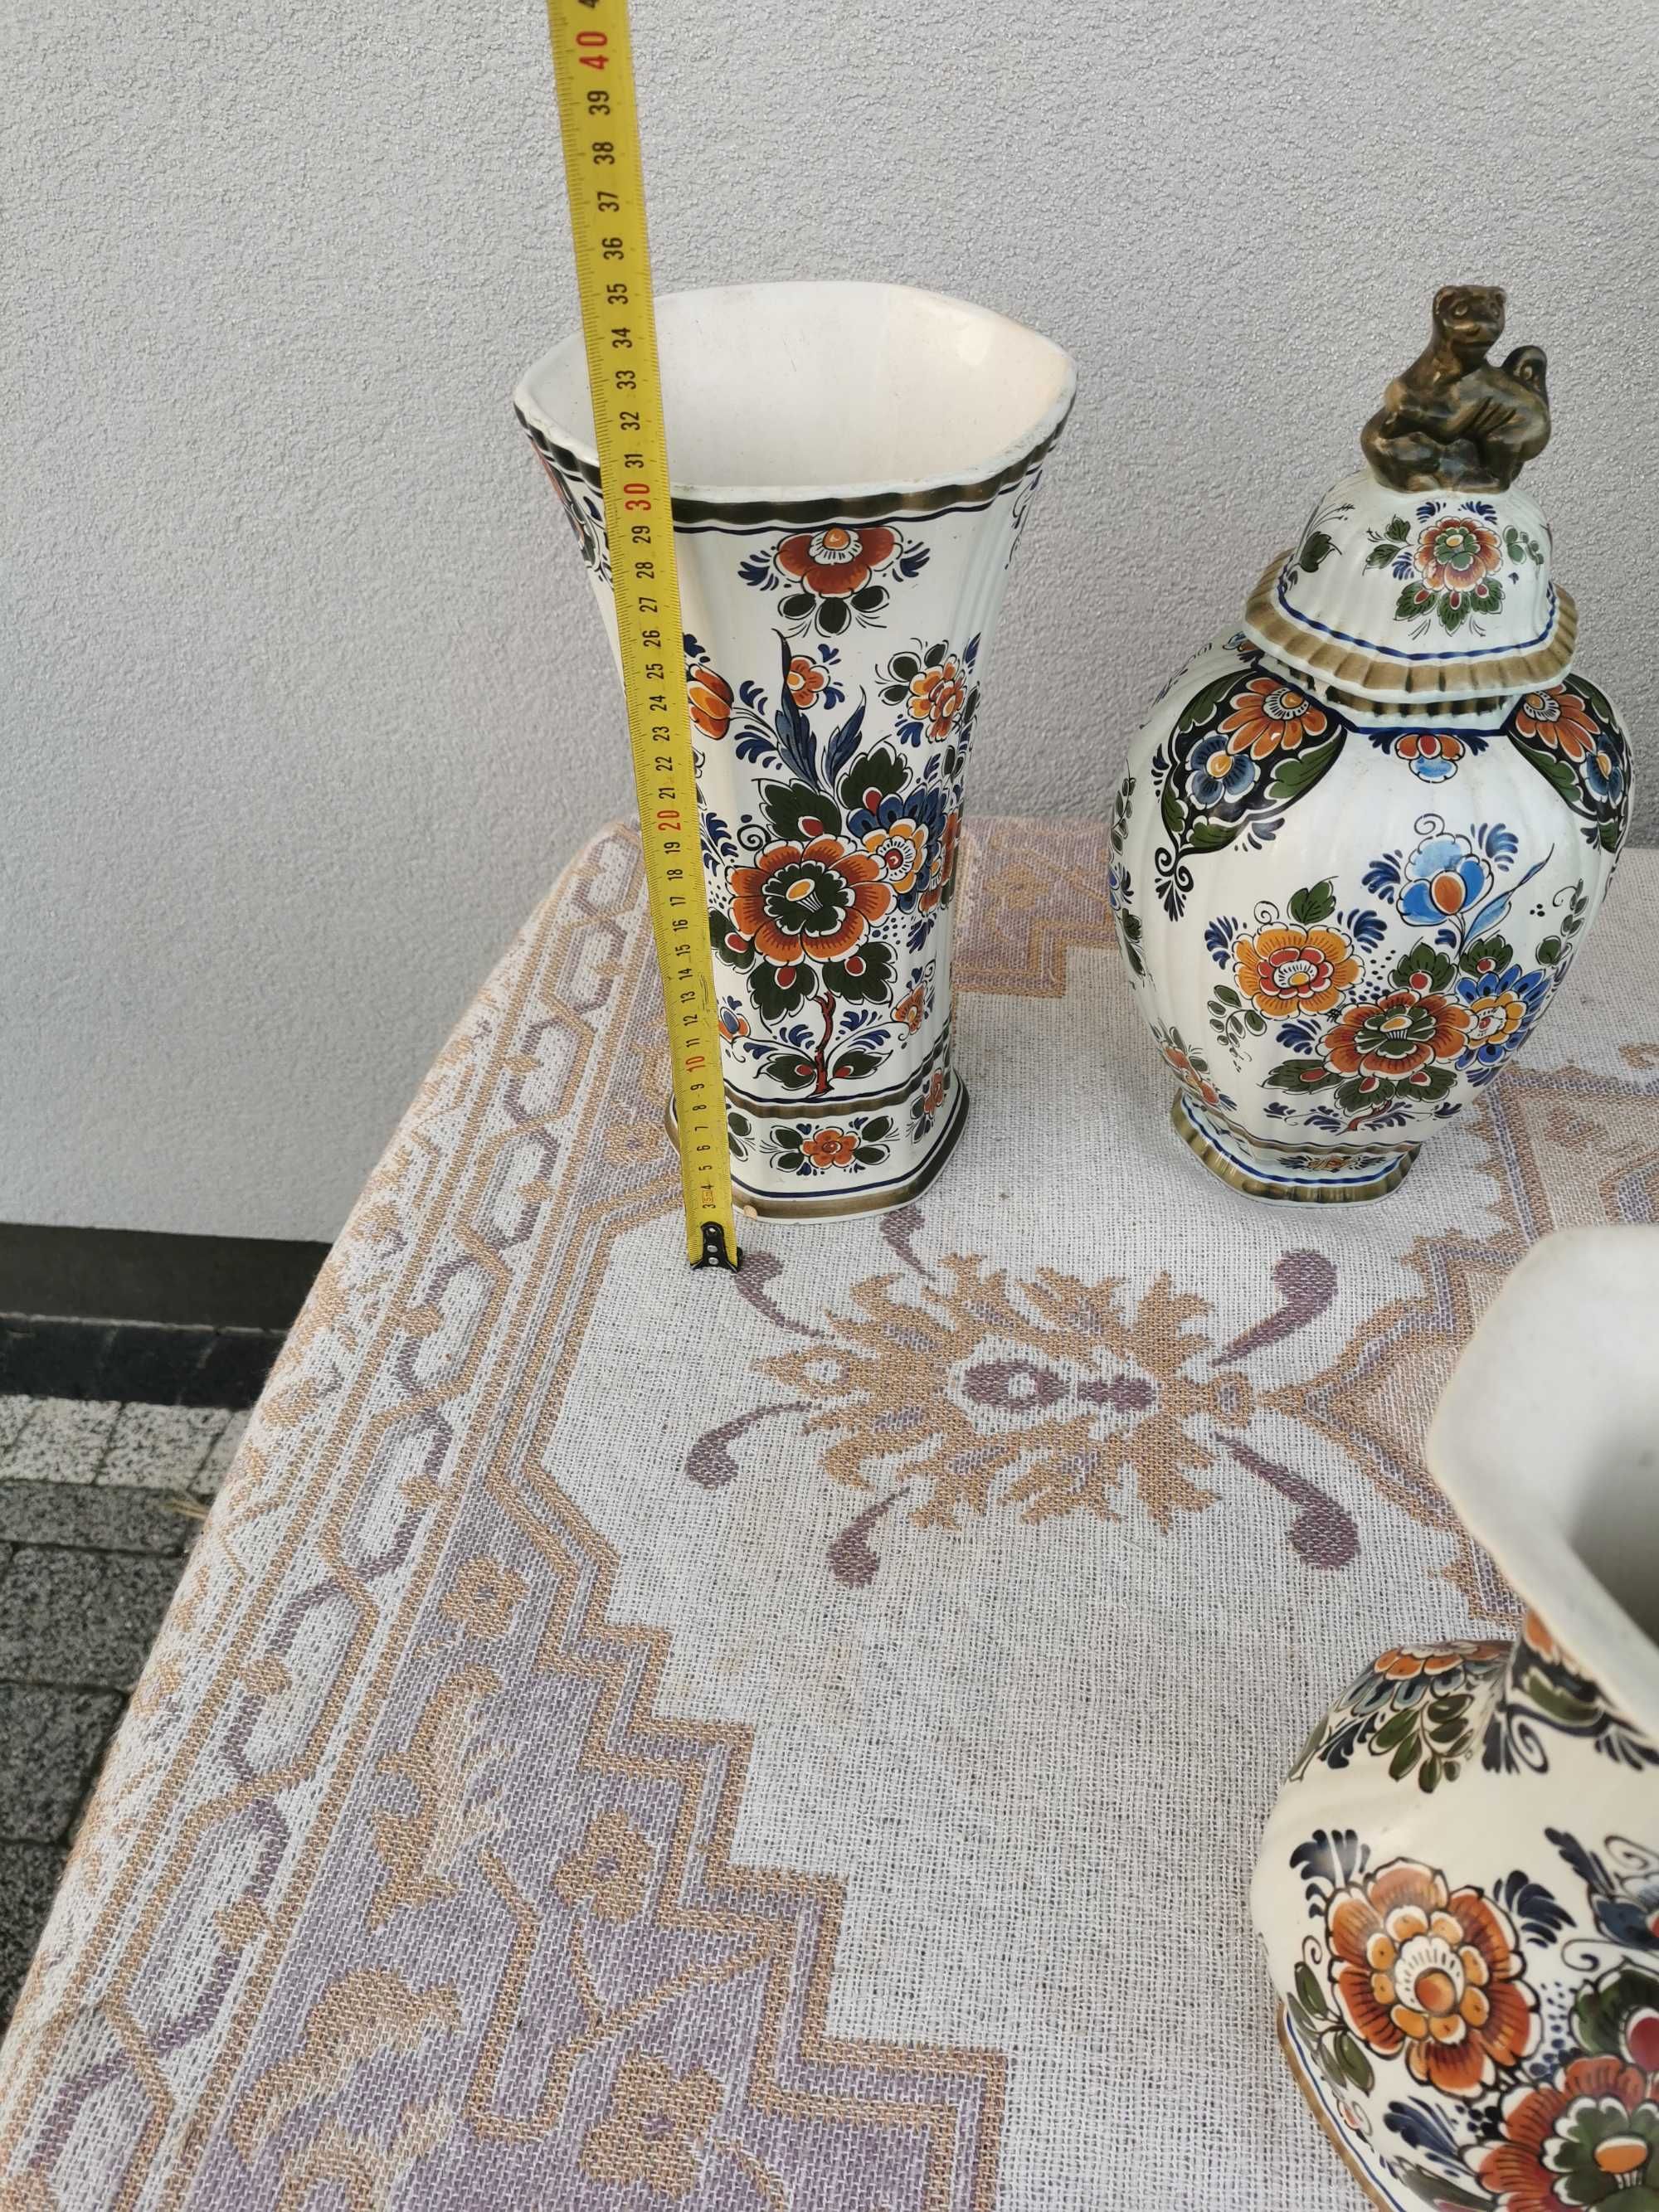 Holenderska Porcelana Delft Fajans zestaw Amfora Urna Dzbanek Waza